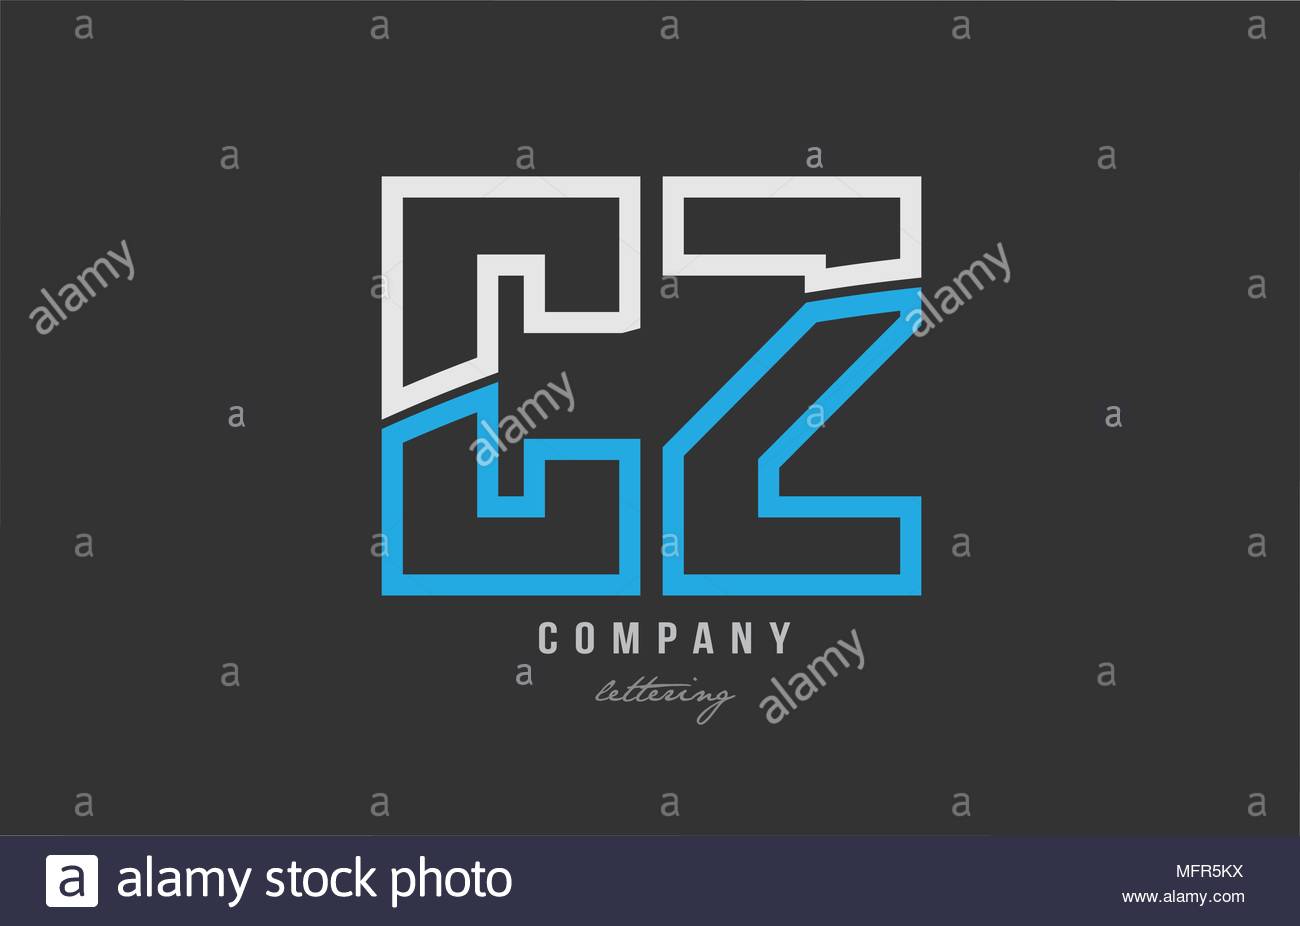 White Blue Alphabet Letter Cz C Z Logo Bination Design On Black